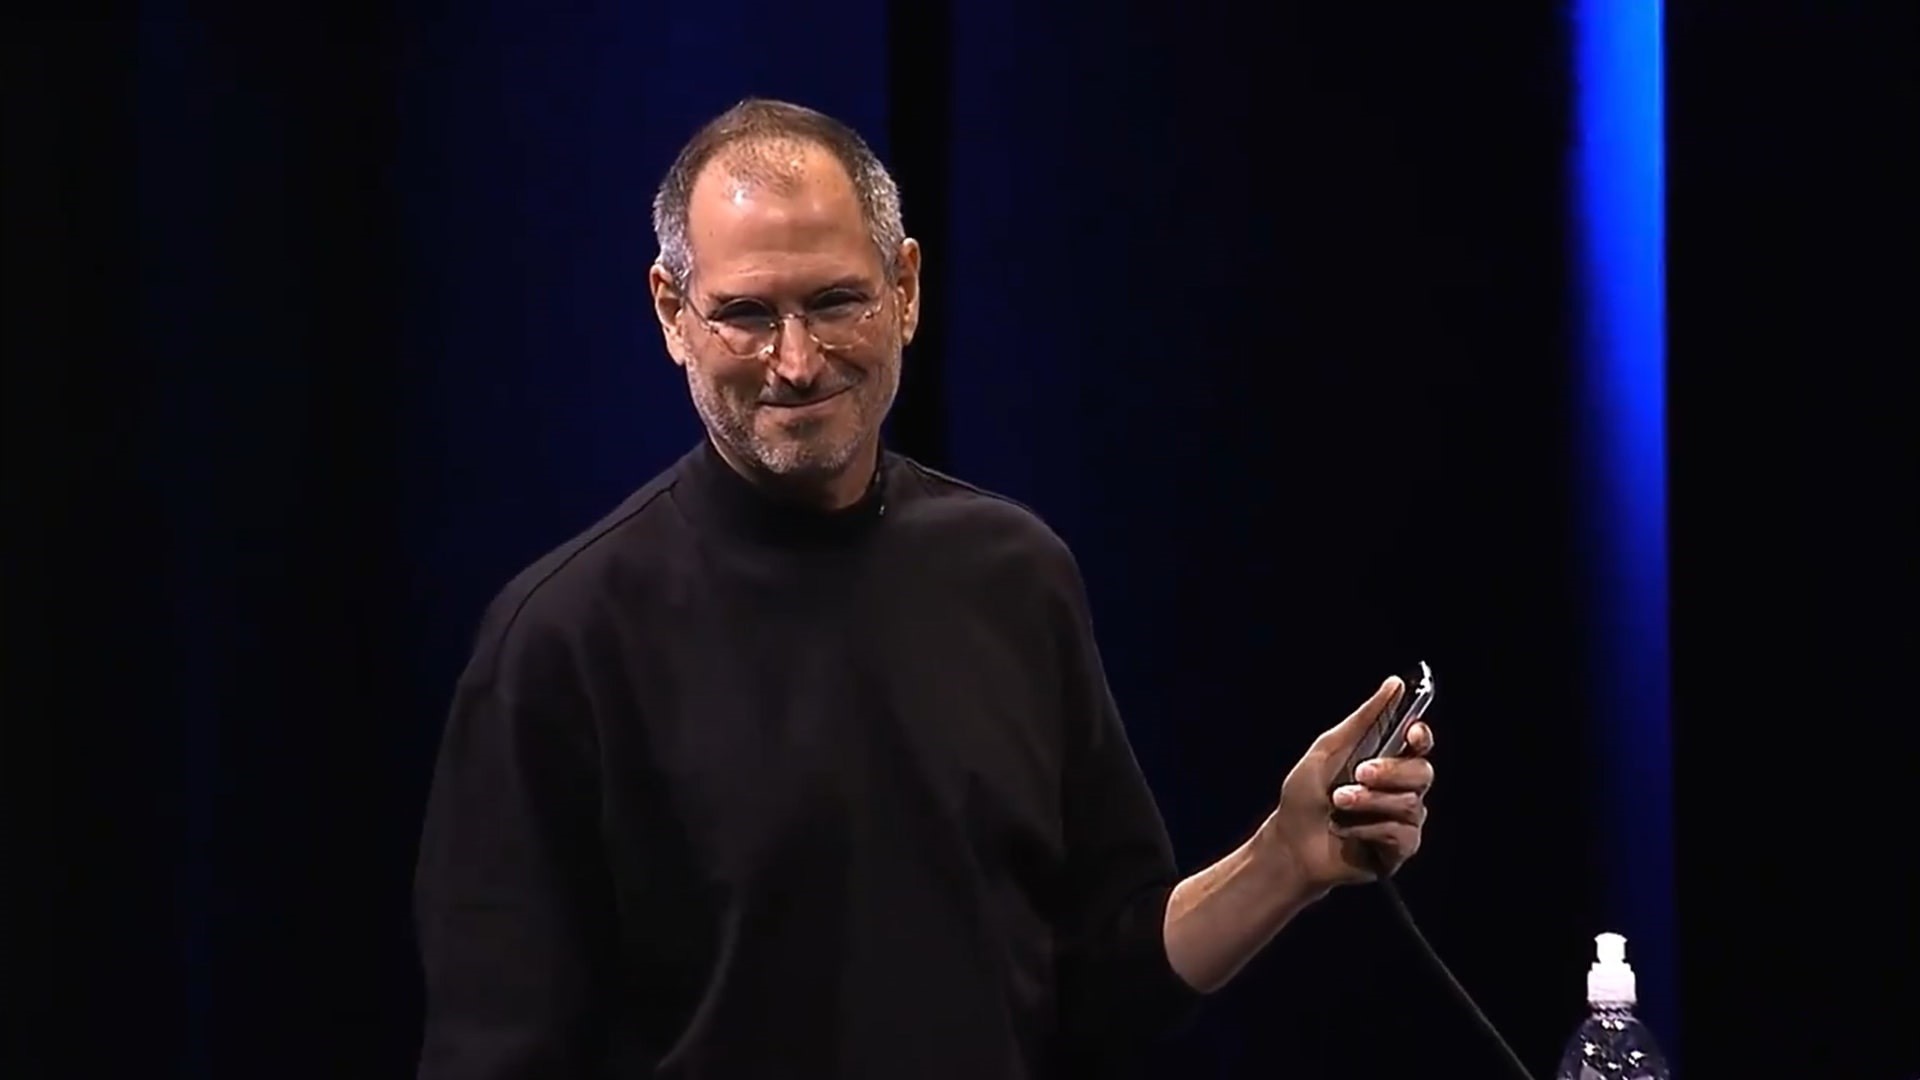 06-10-2021 Steve Jobs en un evento de presentación de Apple.
APPLE / TWITTER
